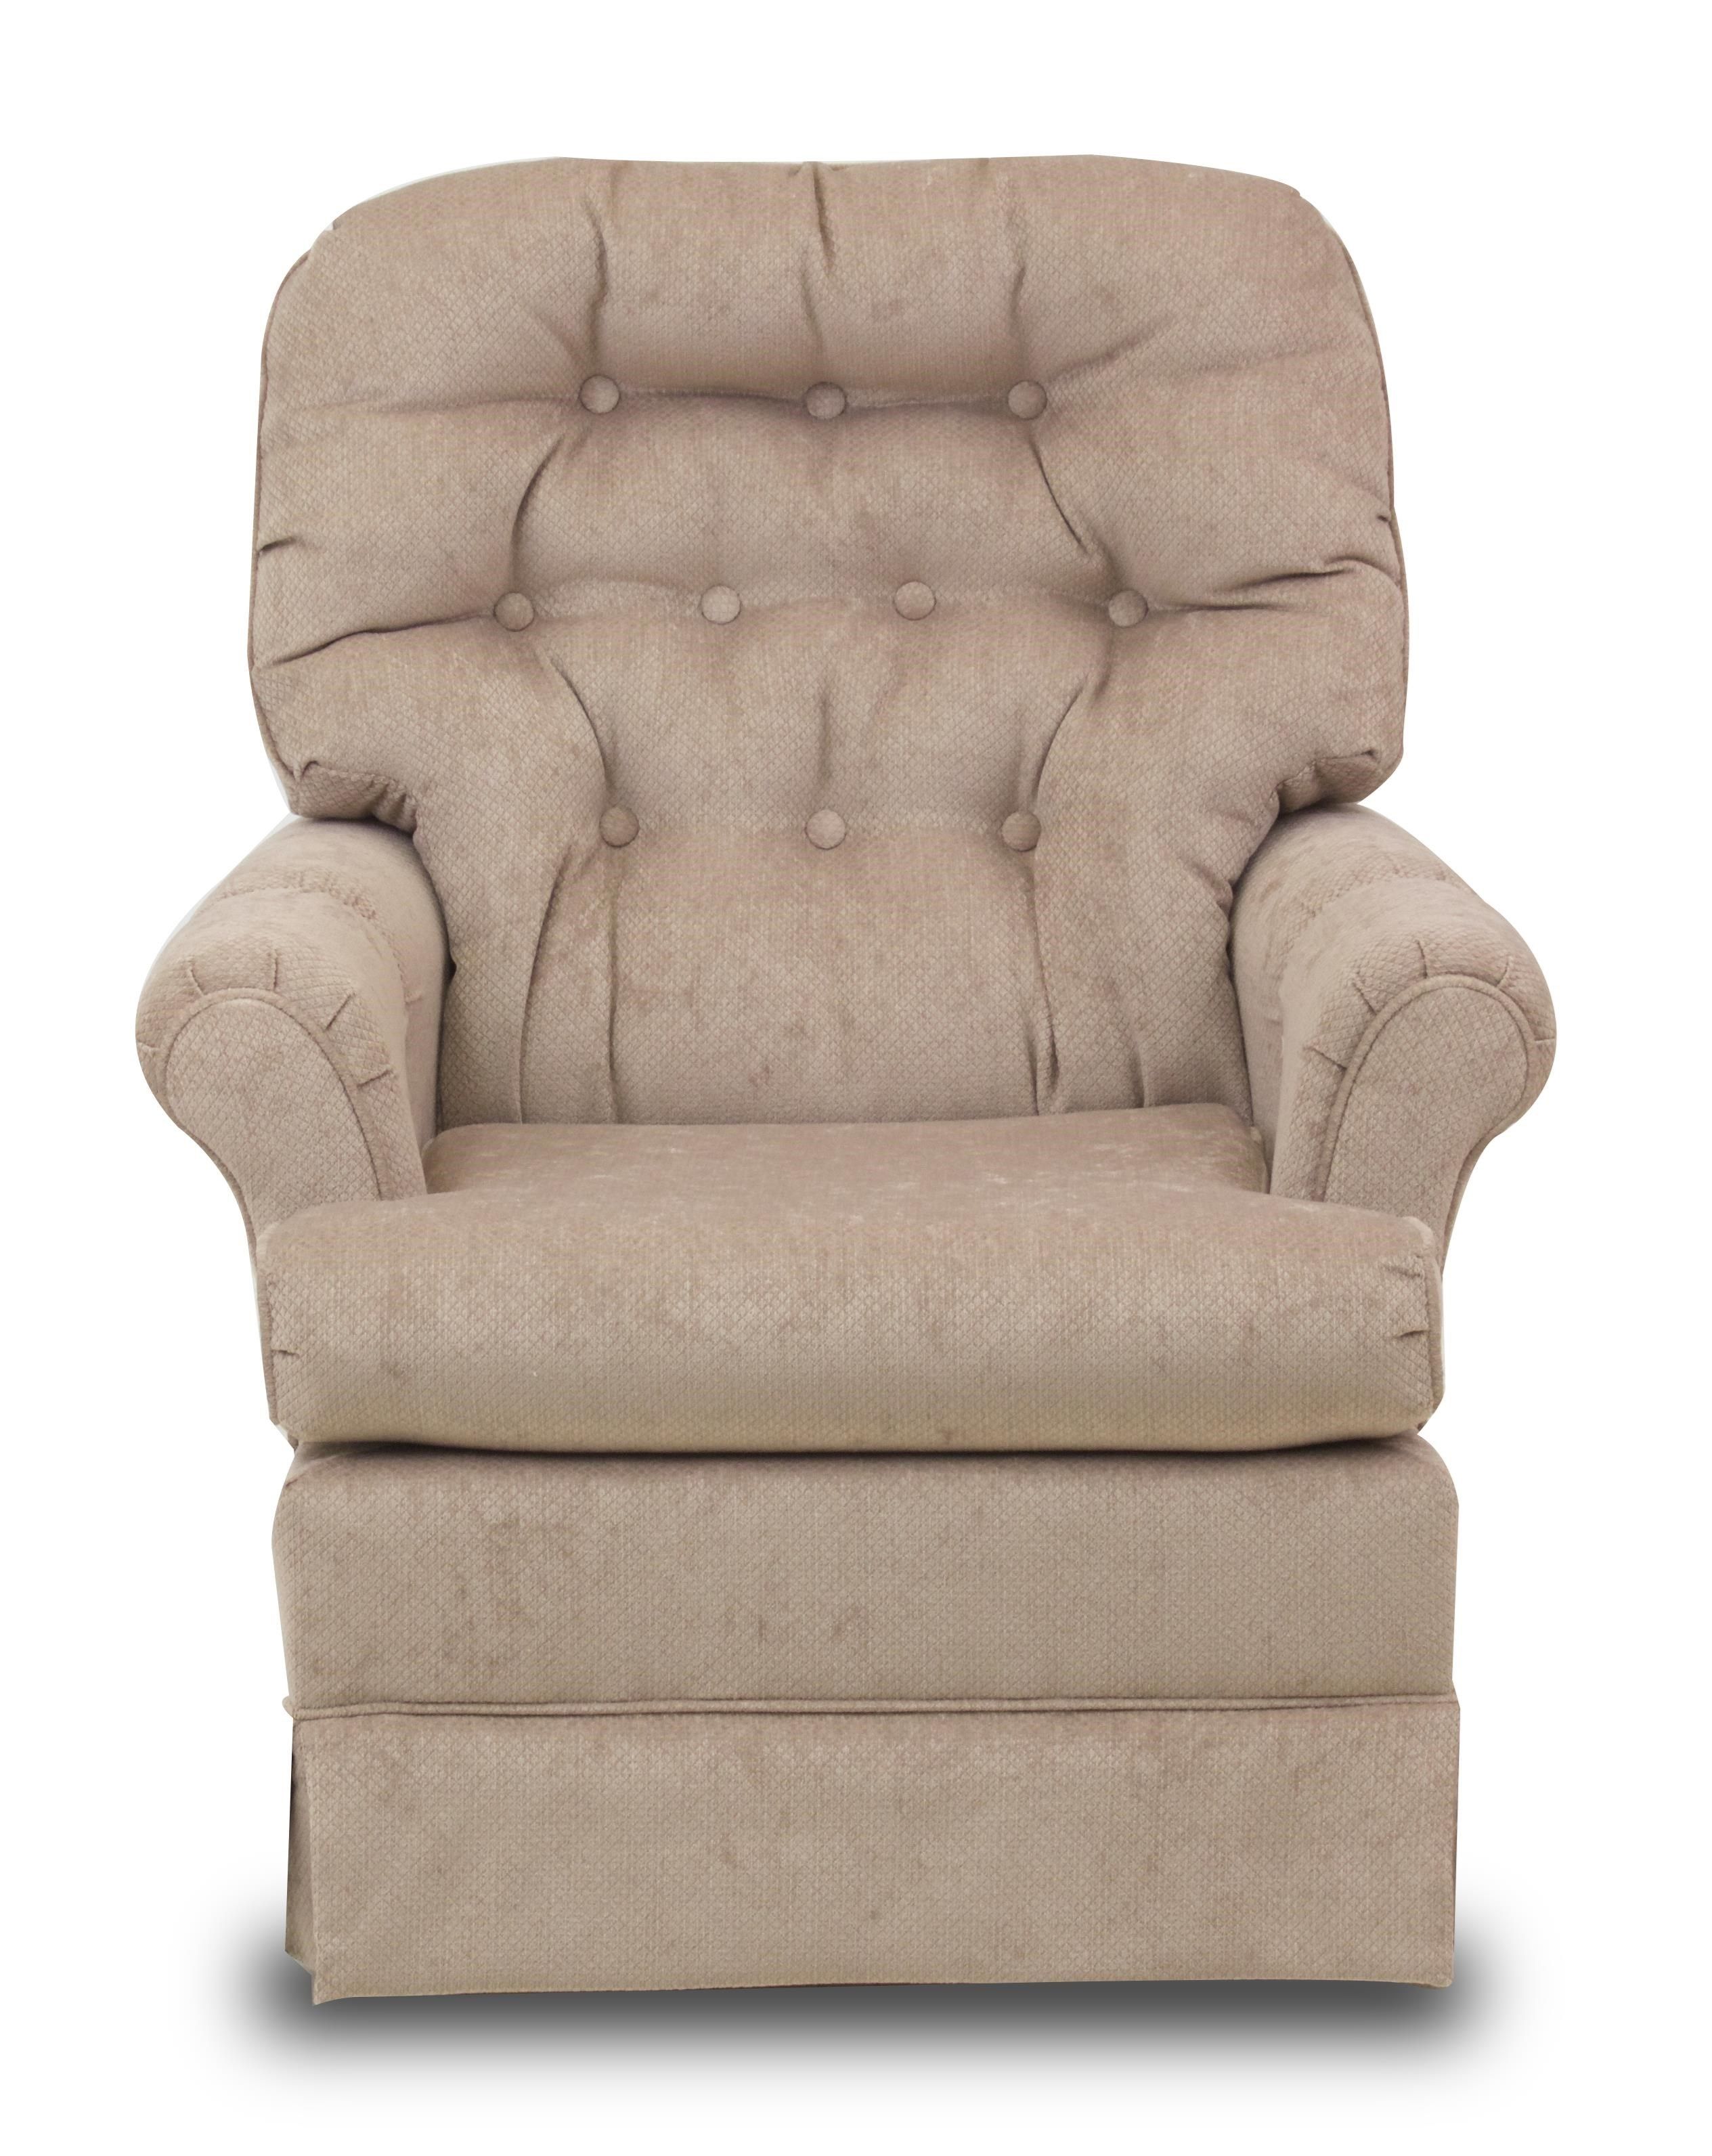 Swivel Glide Chairs Marla Swivel Rocker Chair | Ruby Gordon Home Regarding Swivel Rocking Chairs (View 12 of 15)